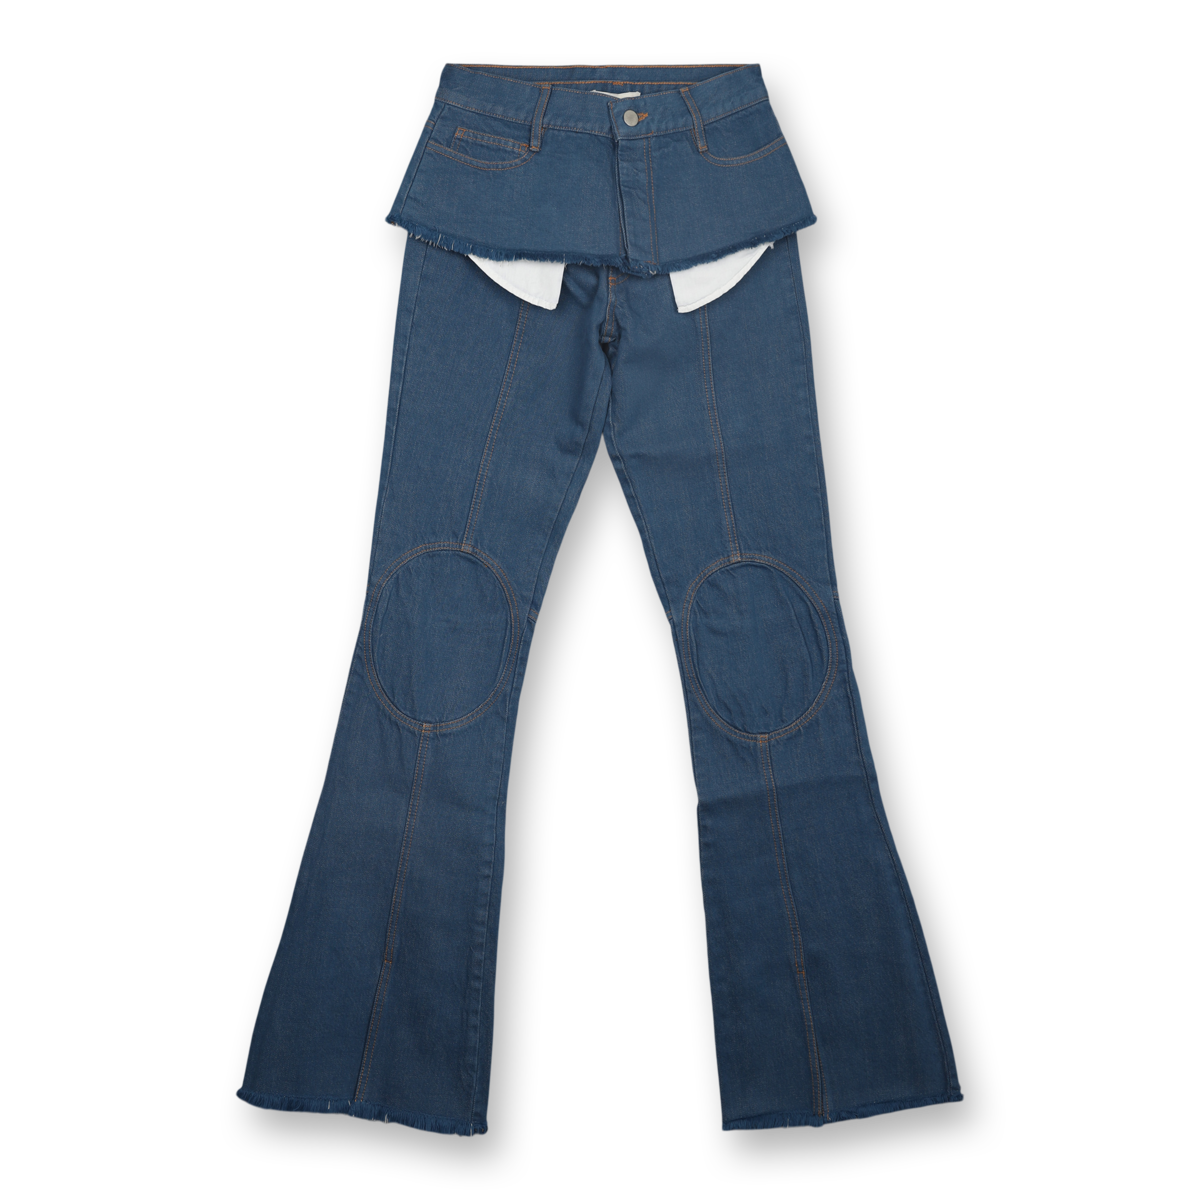 Snell Indigo Jeans